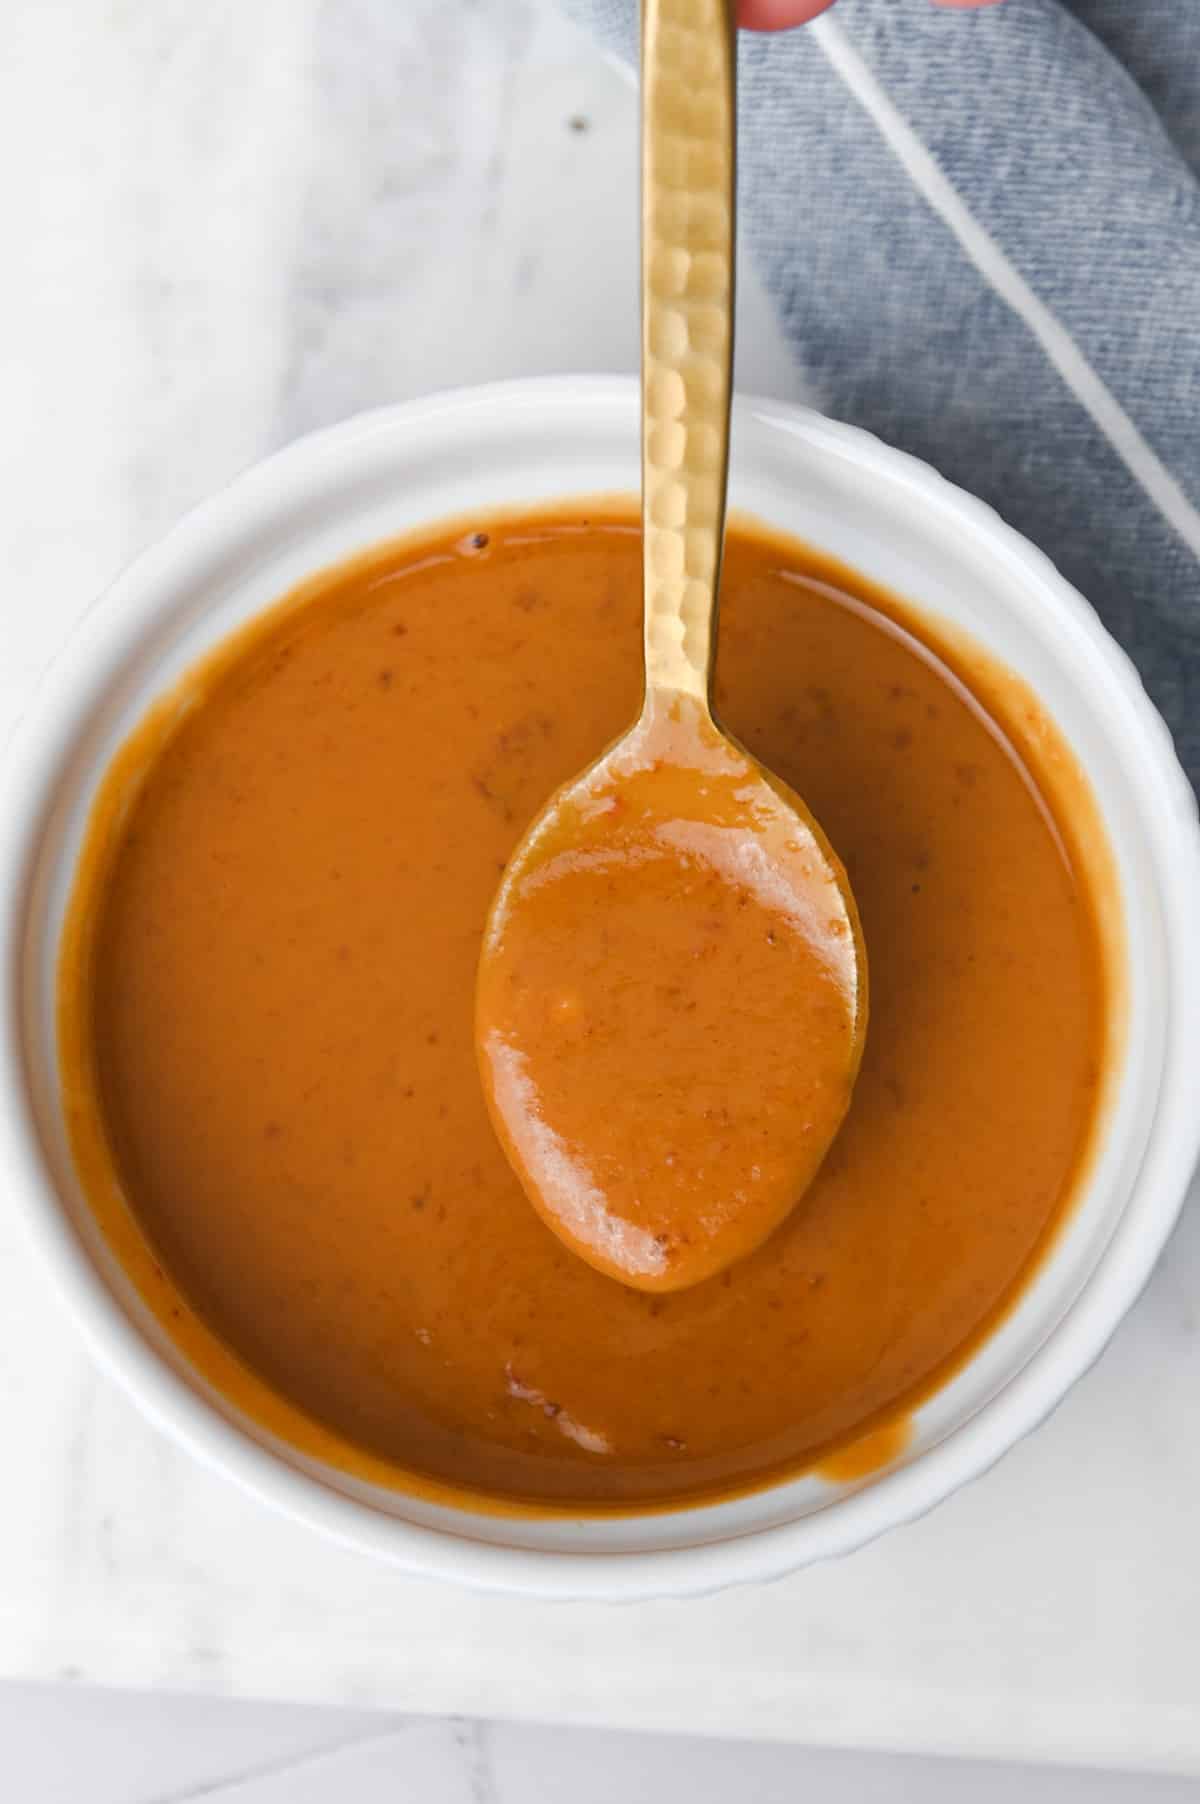 Gold spoon with peanut butter in a white ramekin of peanut sauce.